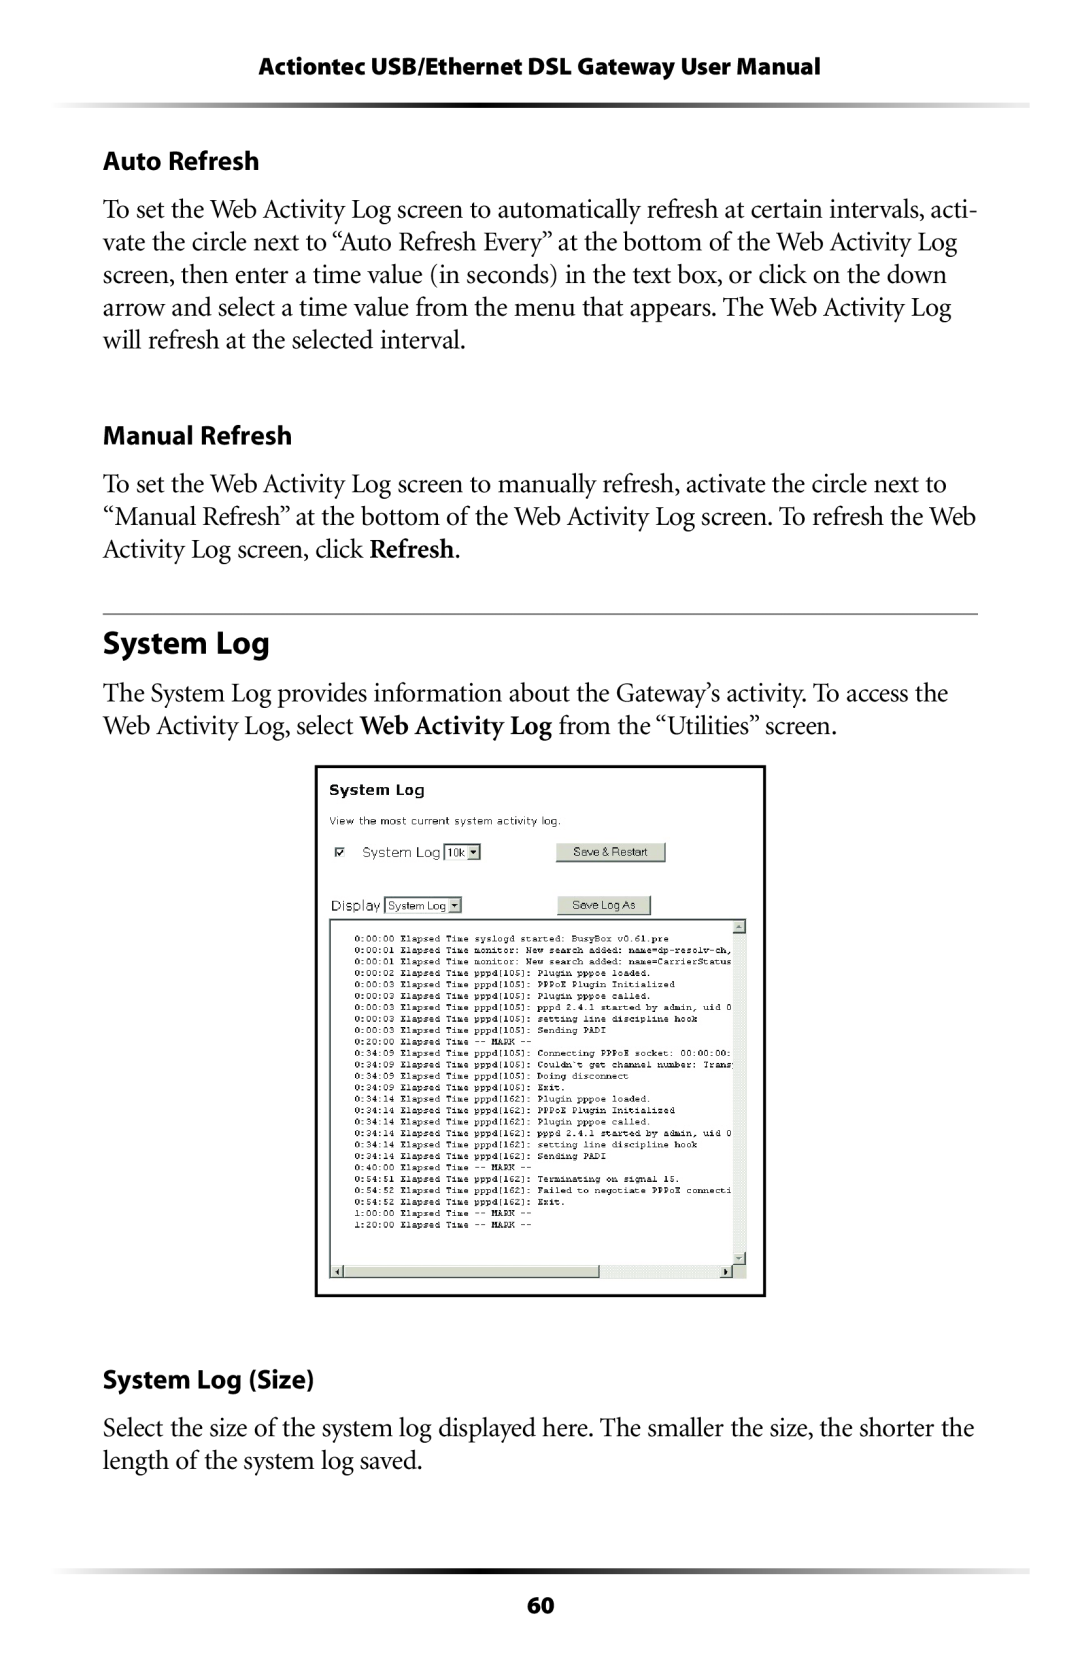 Gateway GT704 user manual System Log 